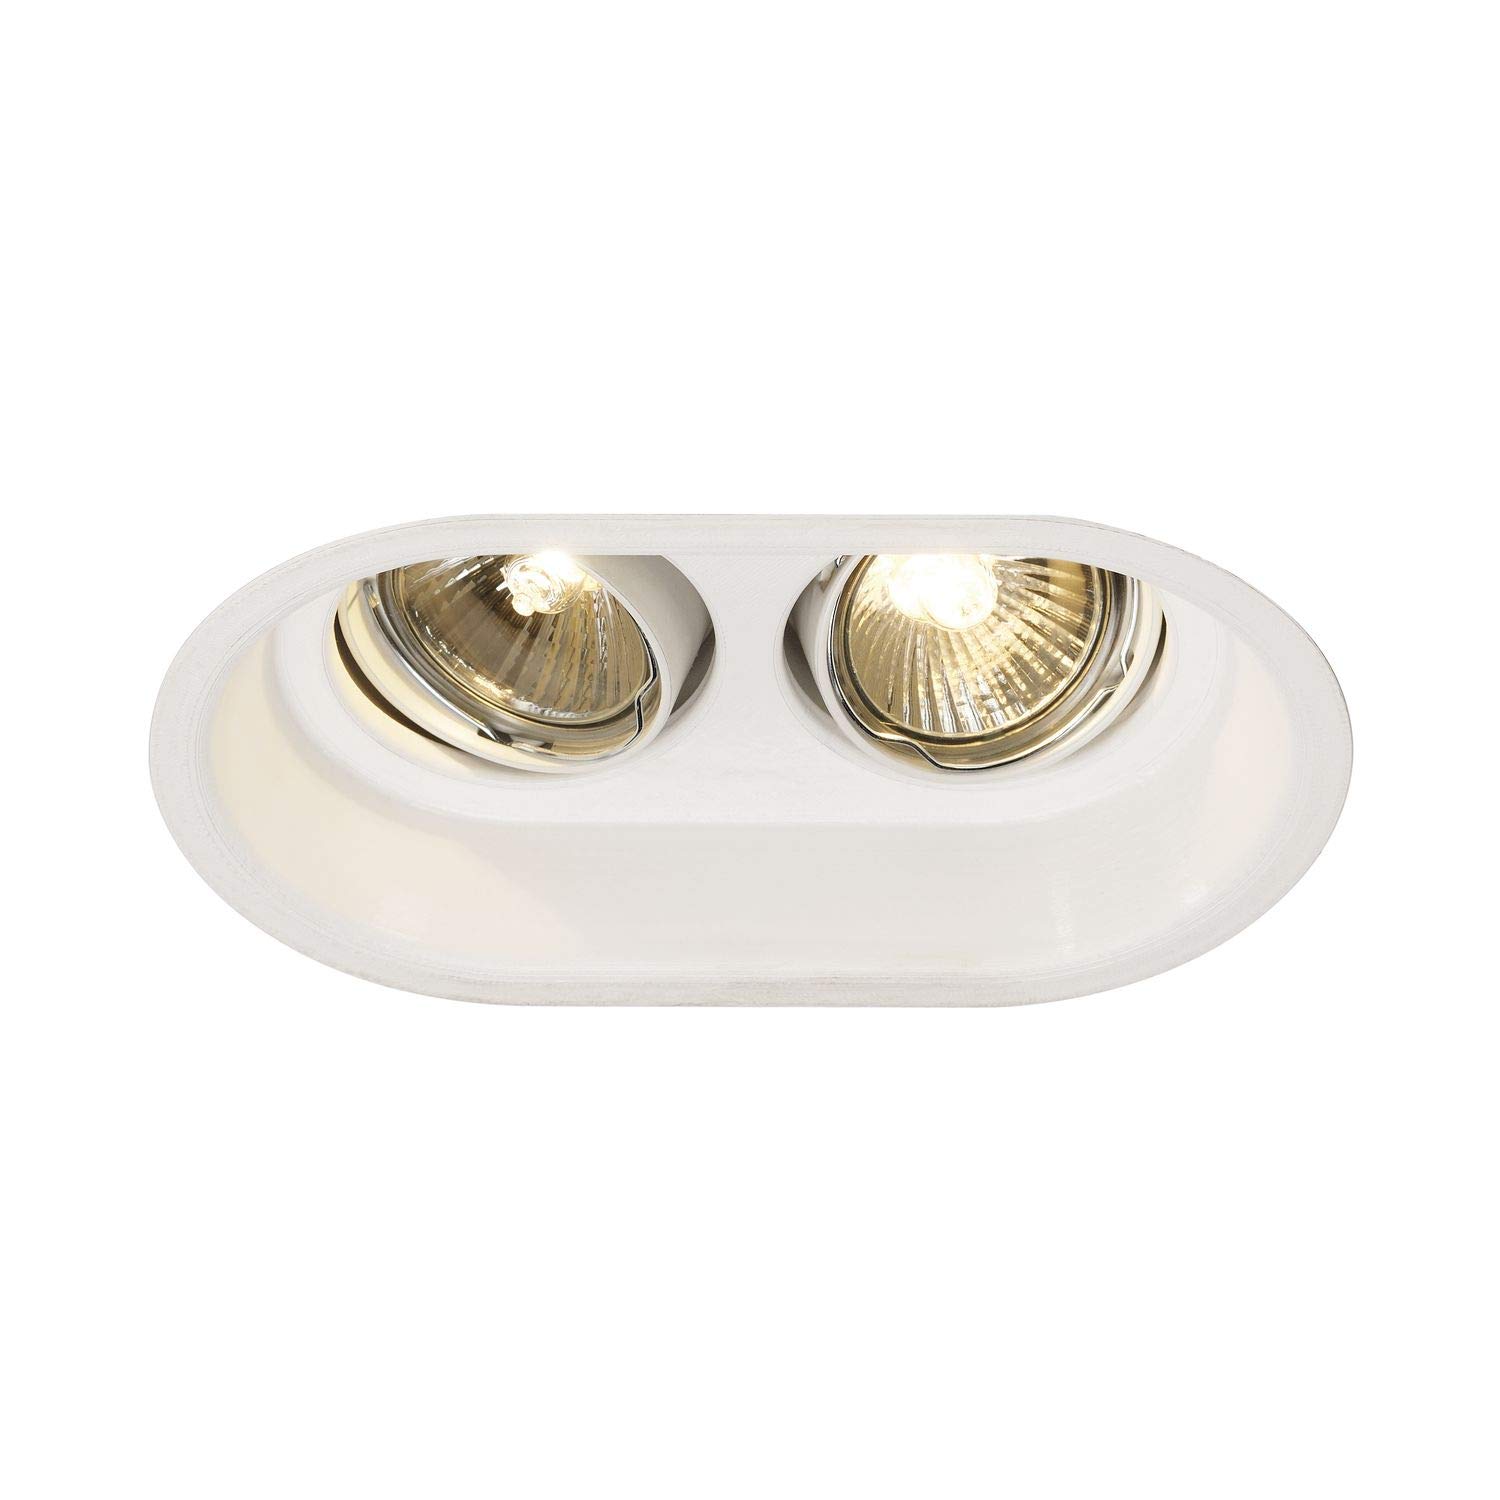 SLV LED Deckenstrahler HORN-O, weiß, rund | Dimmbare Einbau-Spots zur Beleuchtung innen | LED Spot, Einbau-Leuchten, Deckenstrahler, Deckenleuchte, Einbau-Lampen | 2-strahlig, GU10 QPAR51